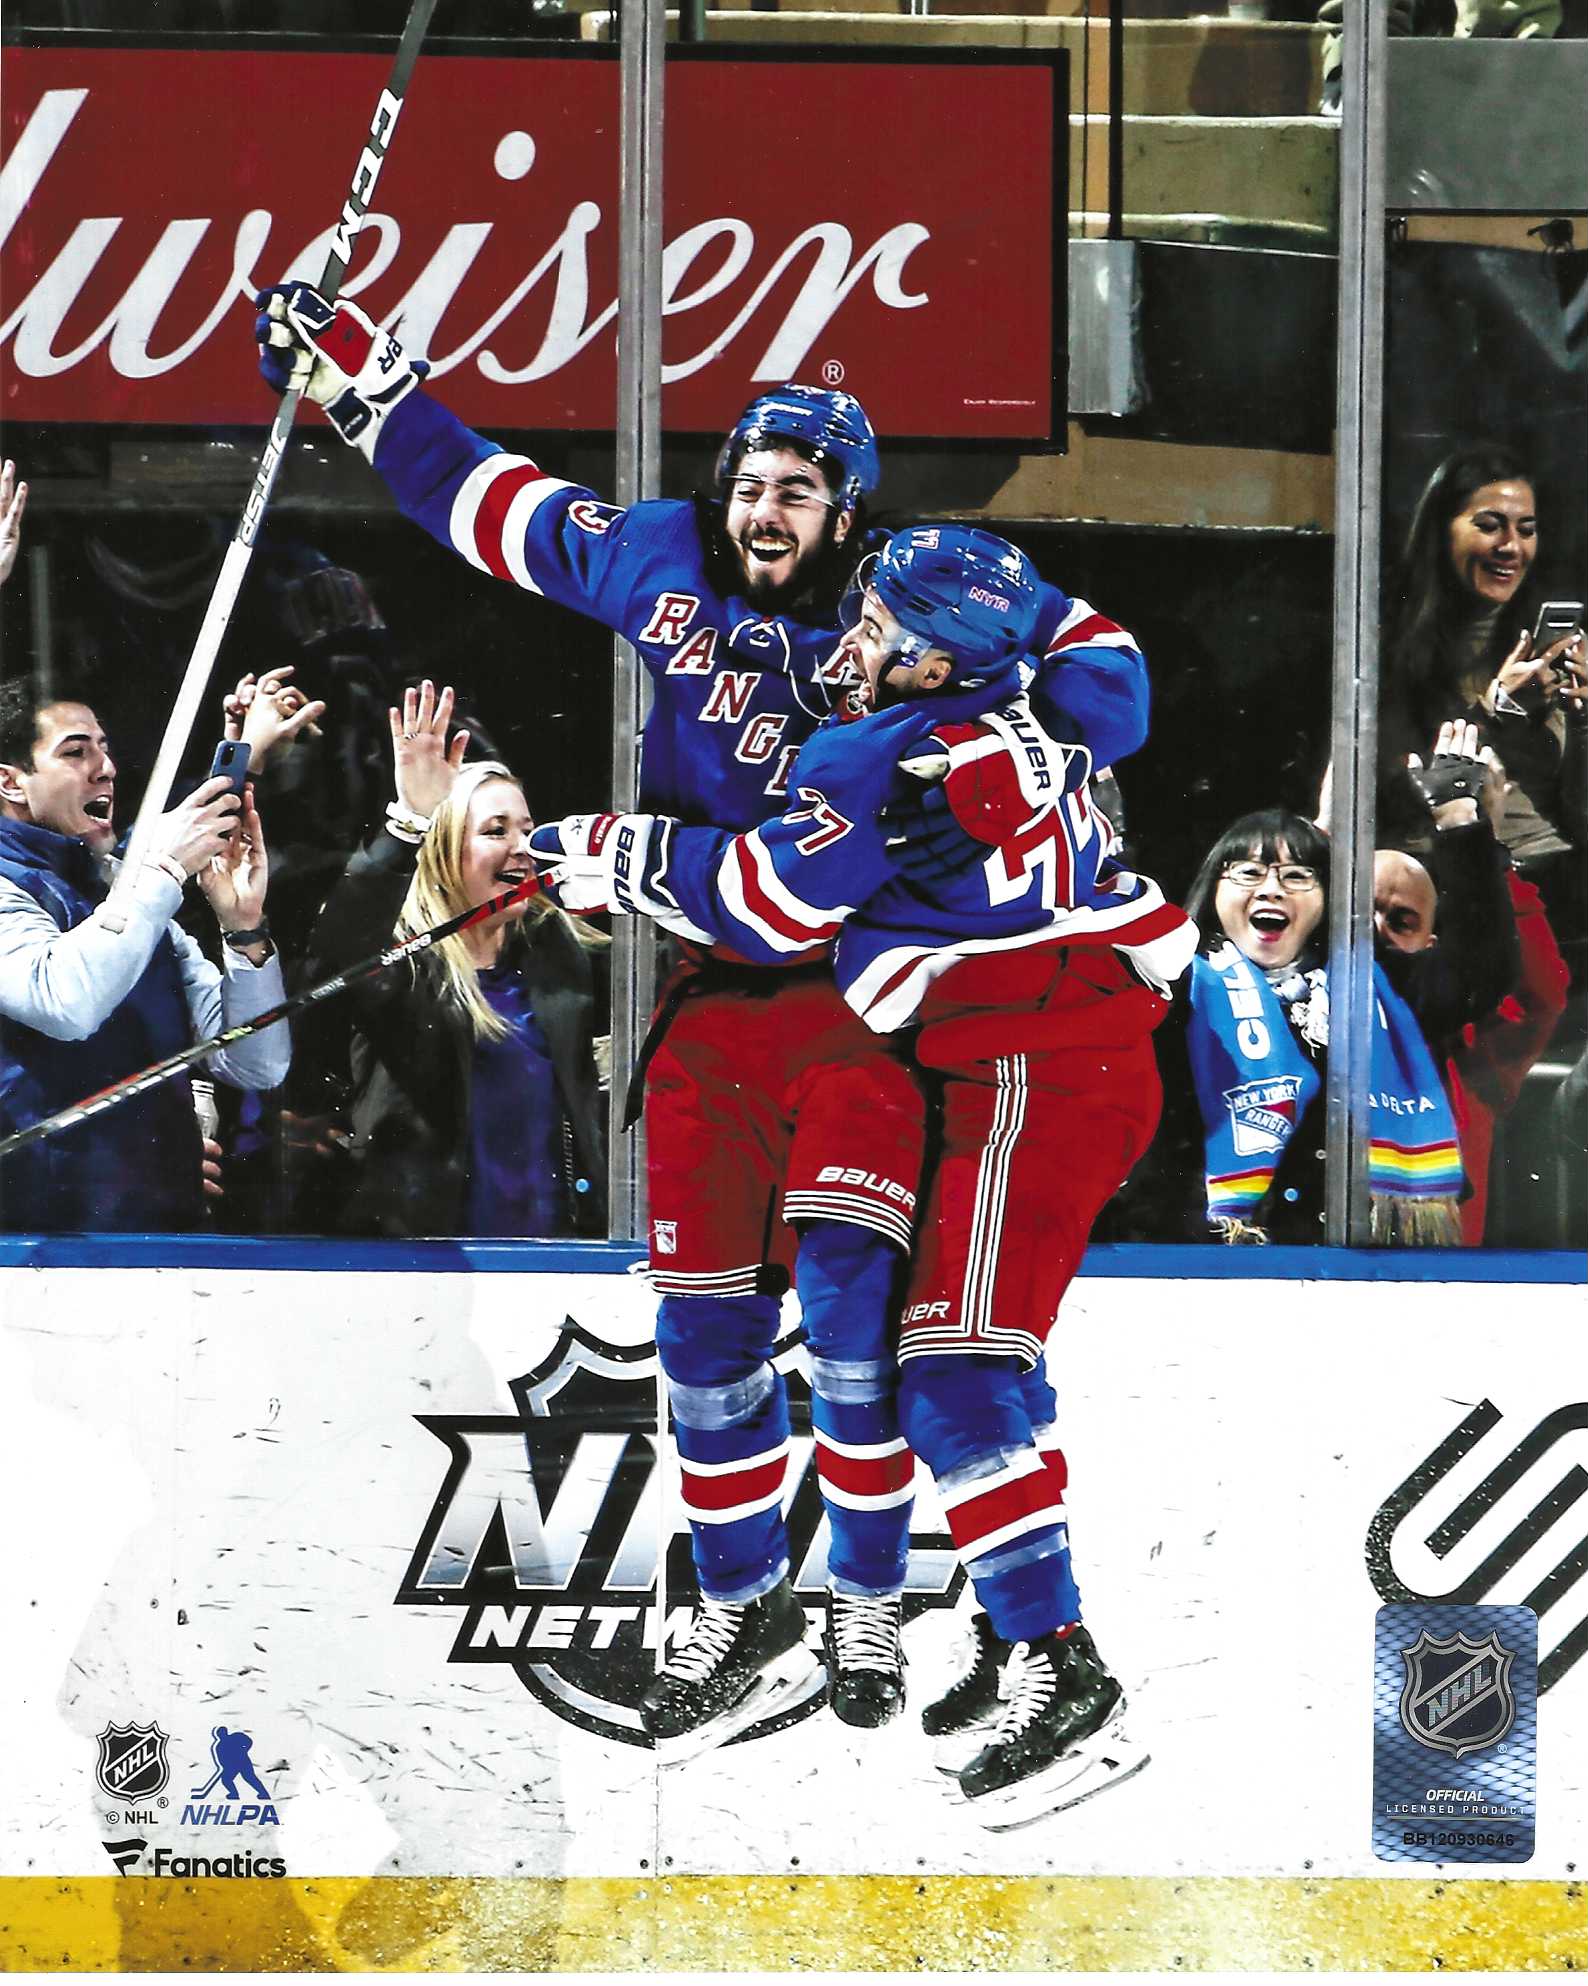 The New York Rangers Mika Zibanejad Five Goal Game Overtime Goal Celebration 8x10 Photo Picture